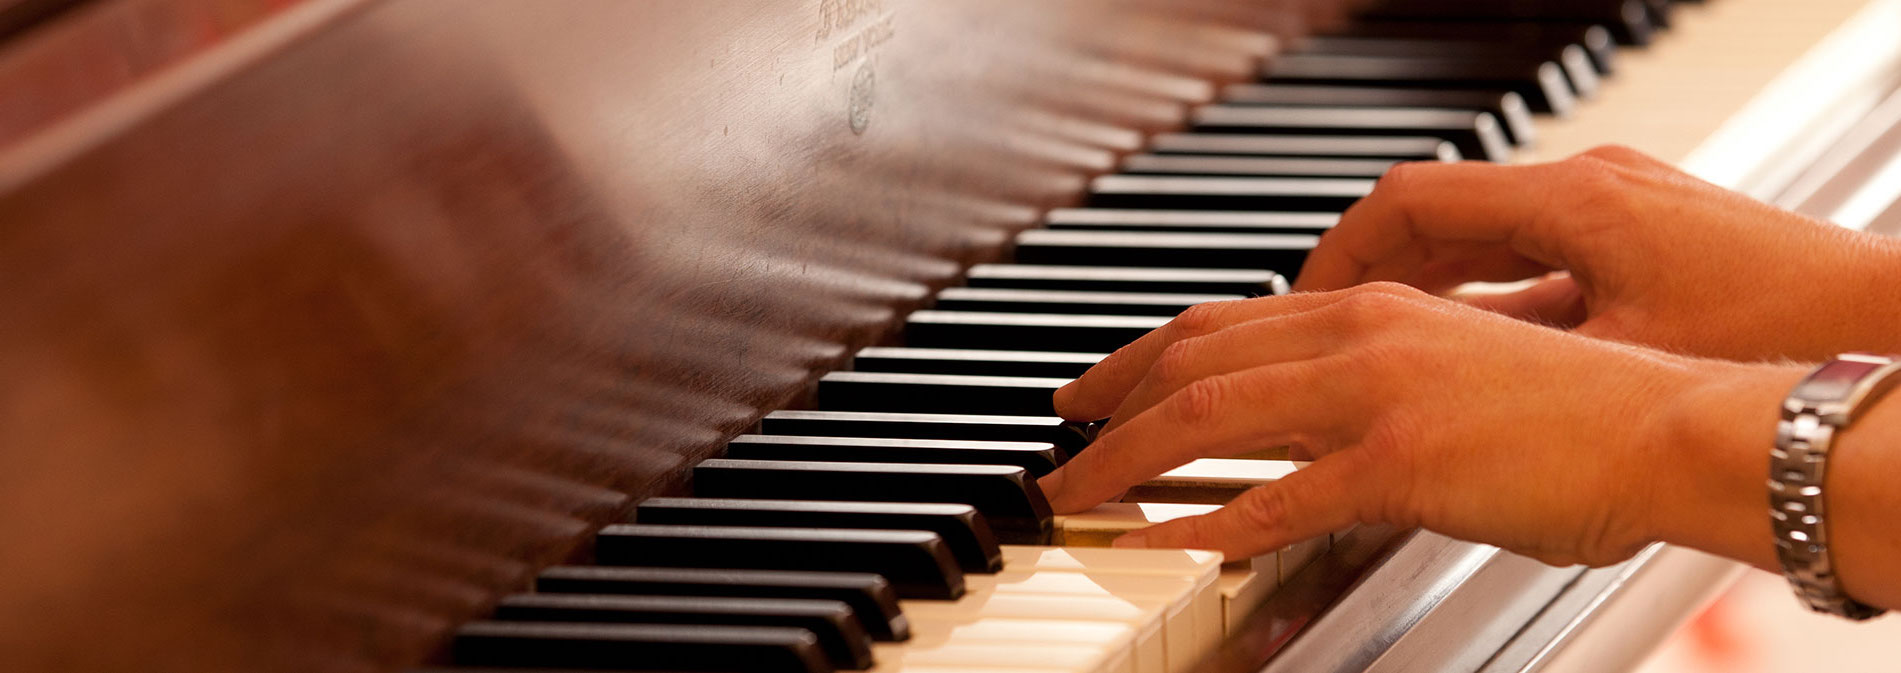 hands playing piano keys